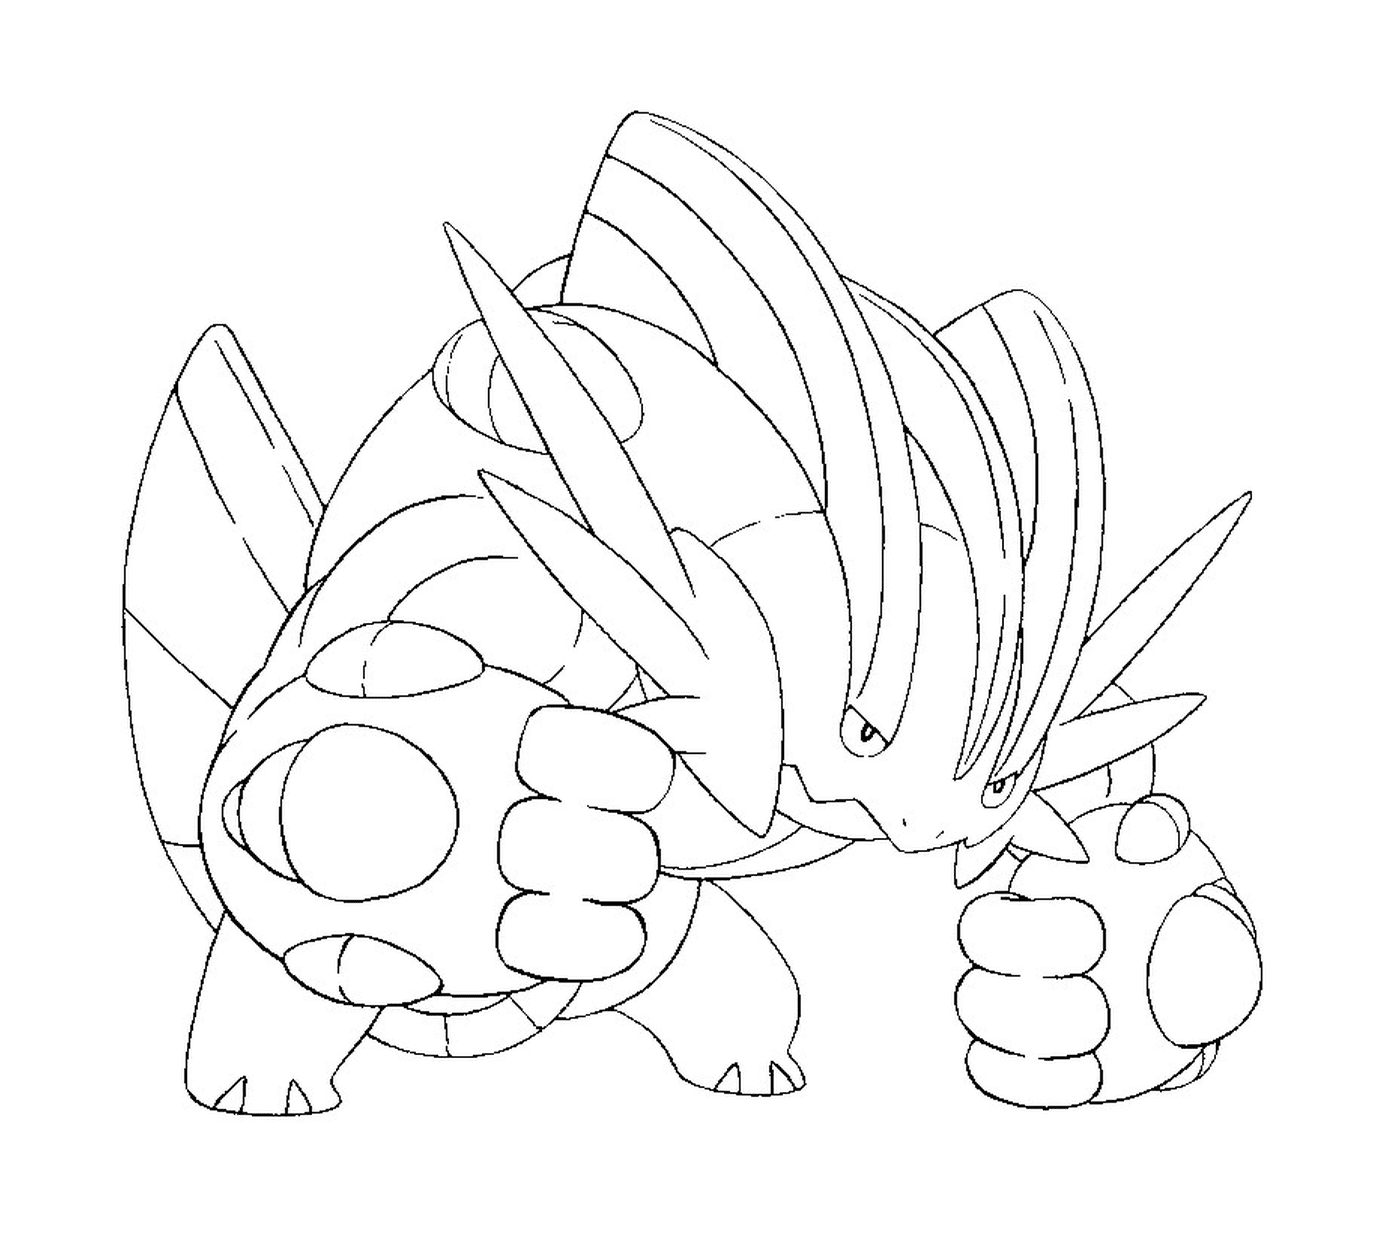  Laggron, an amphibious Pokémon 